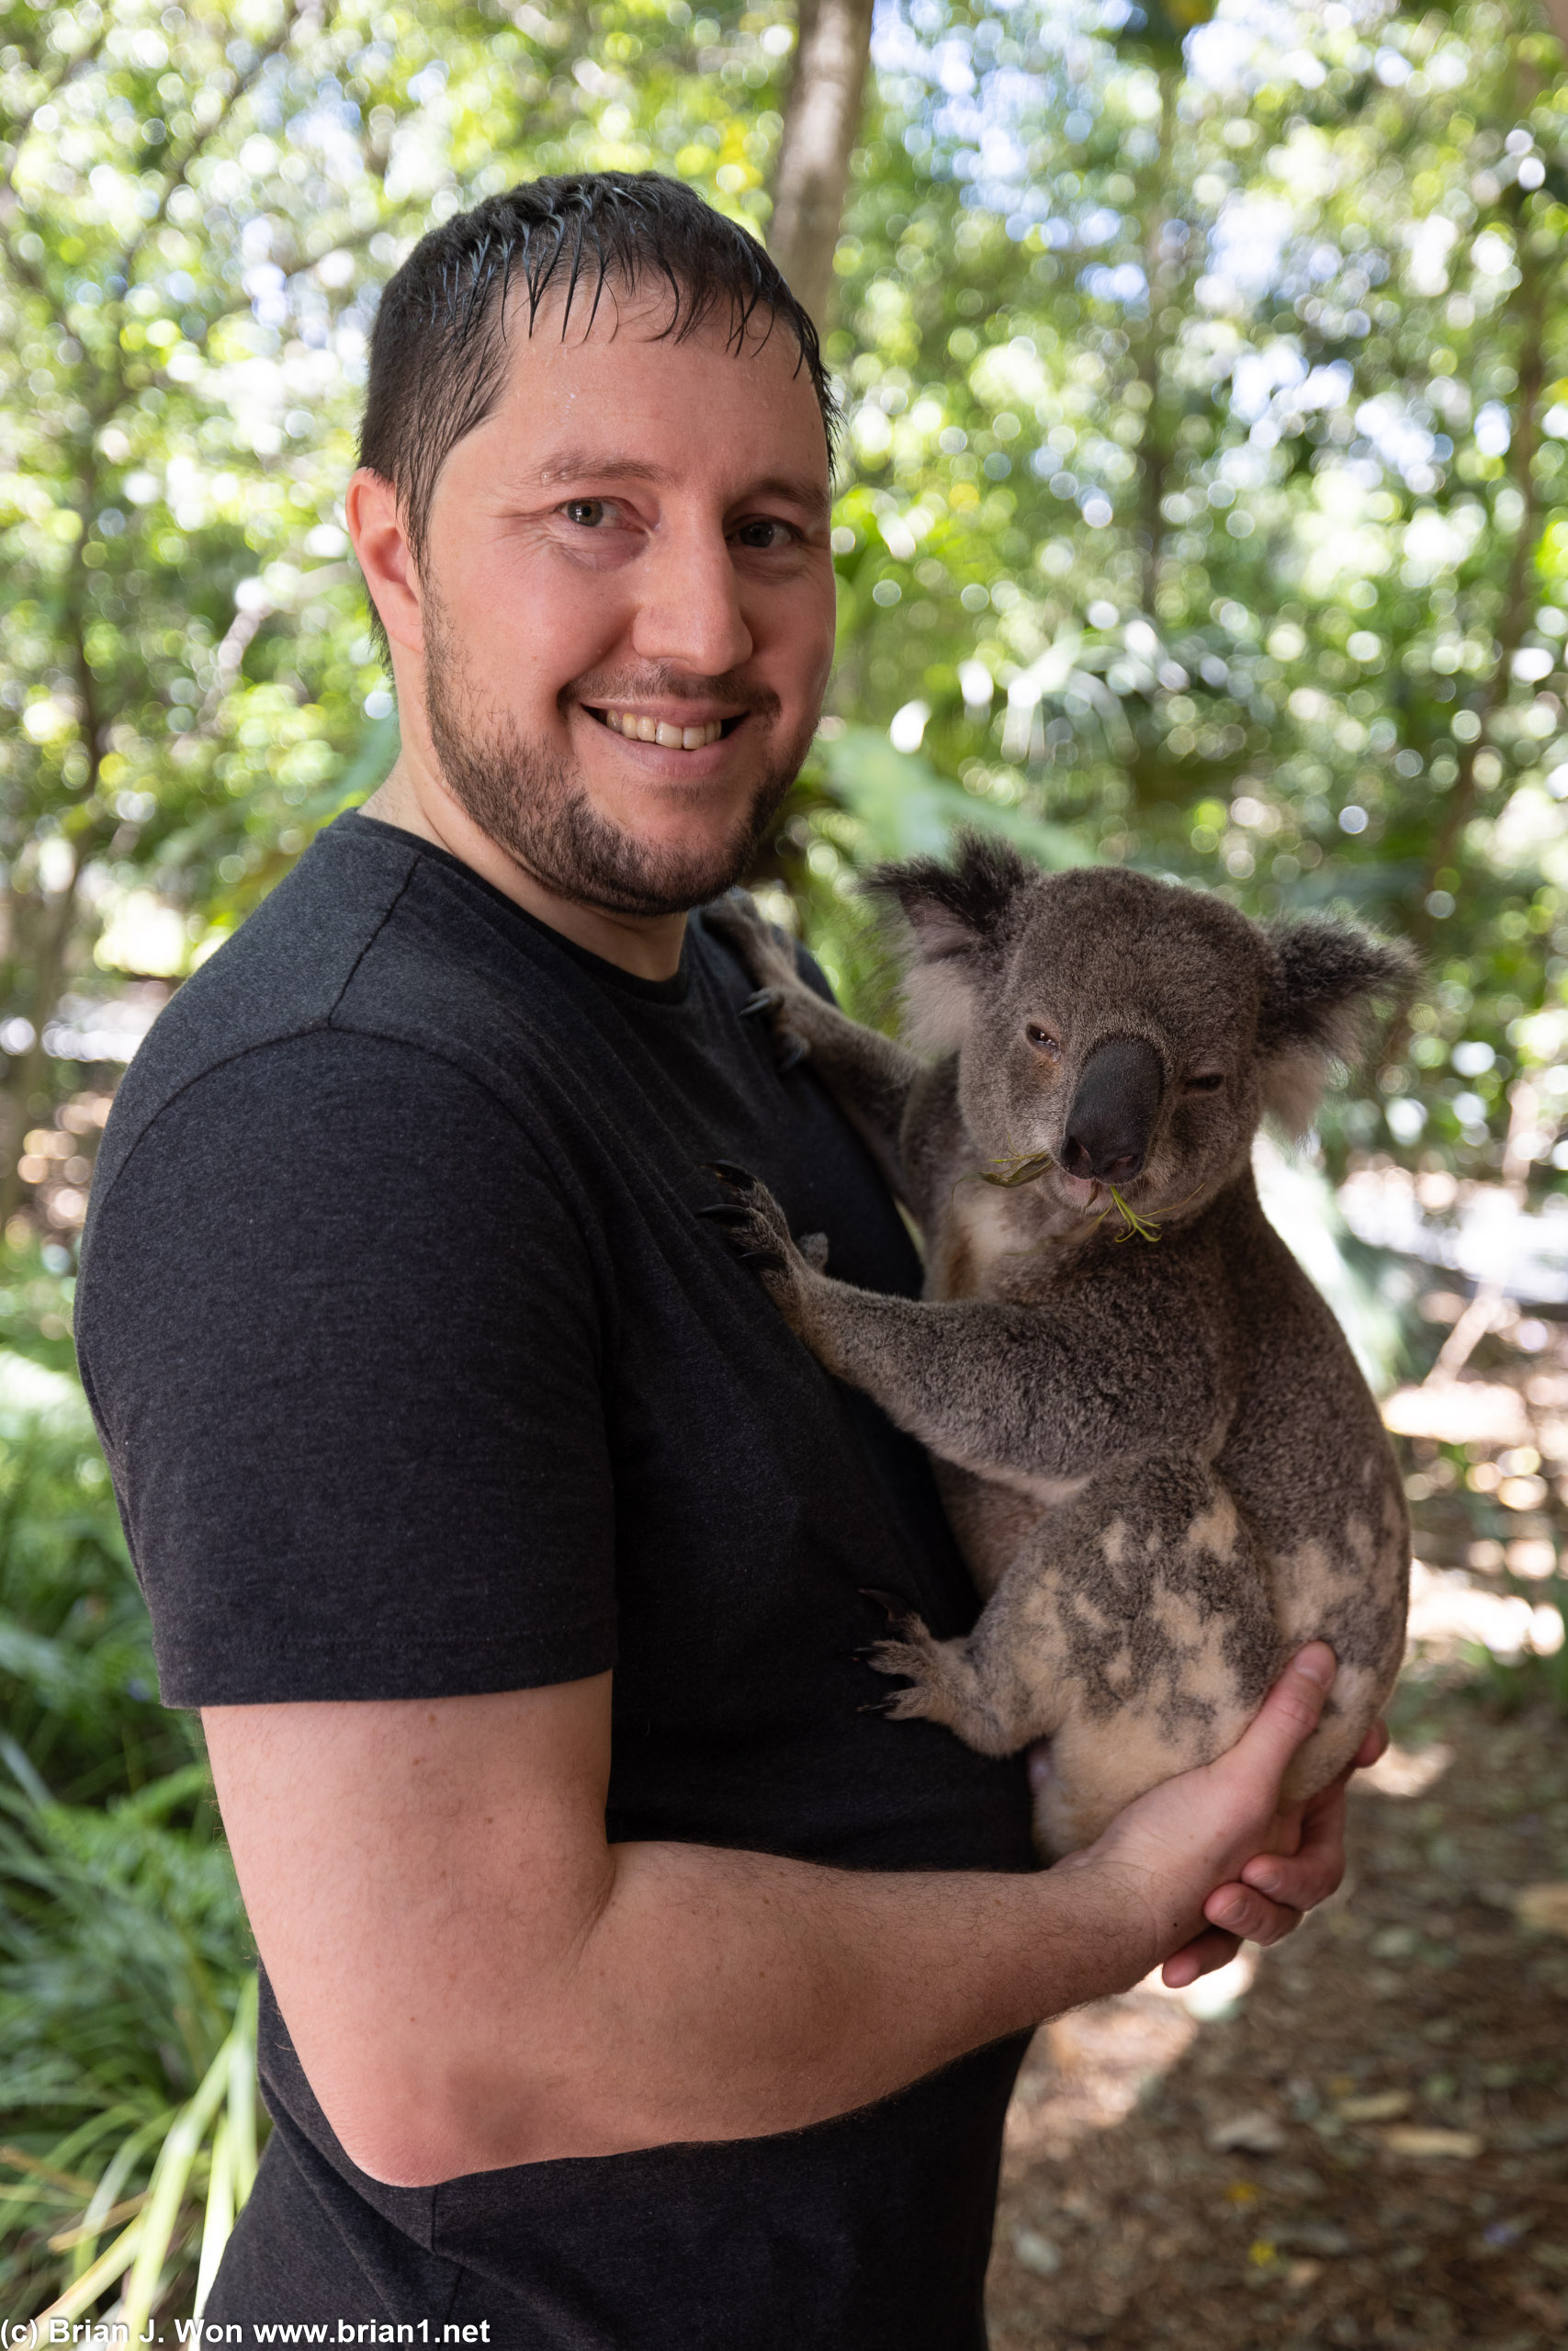 Holding Baron the koala.